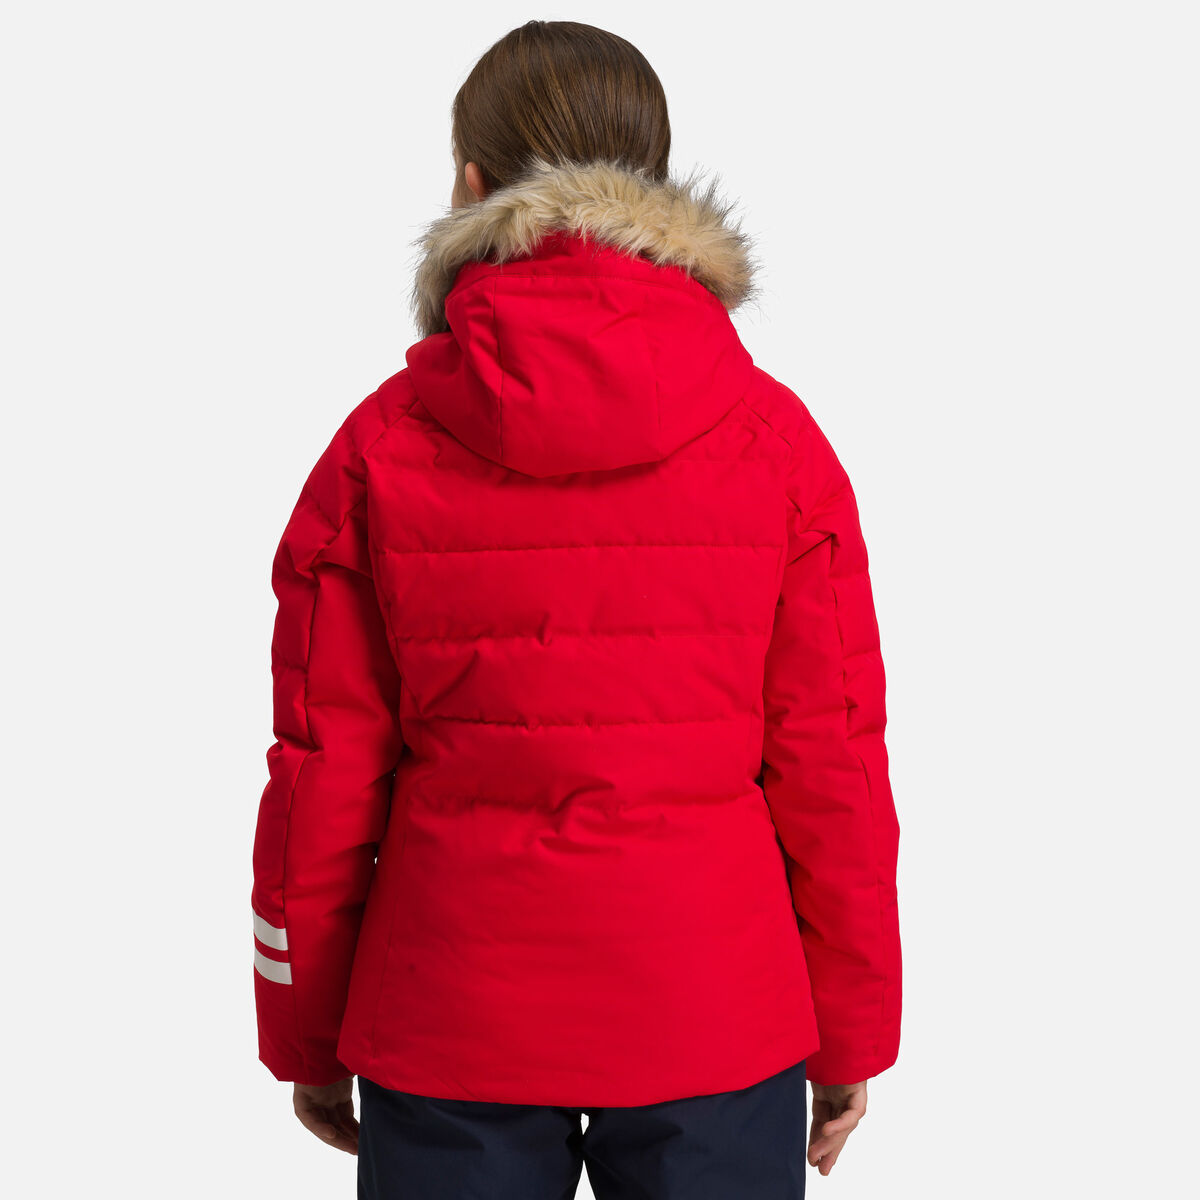 Rossignol Girls' Polydown Ski Jacket Red